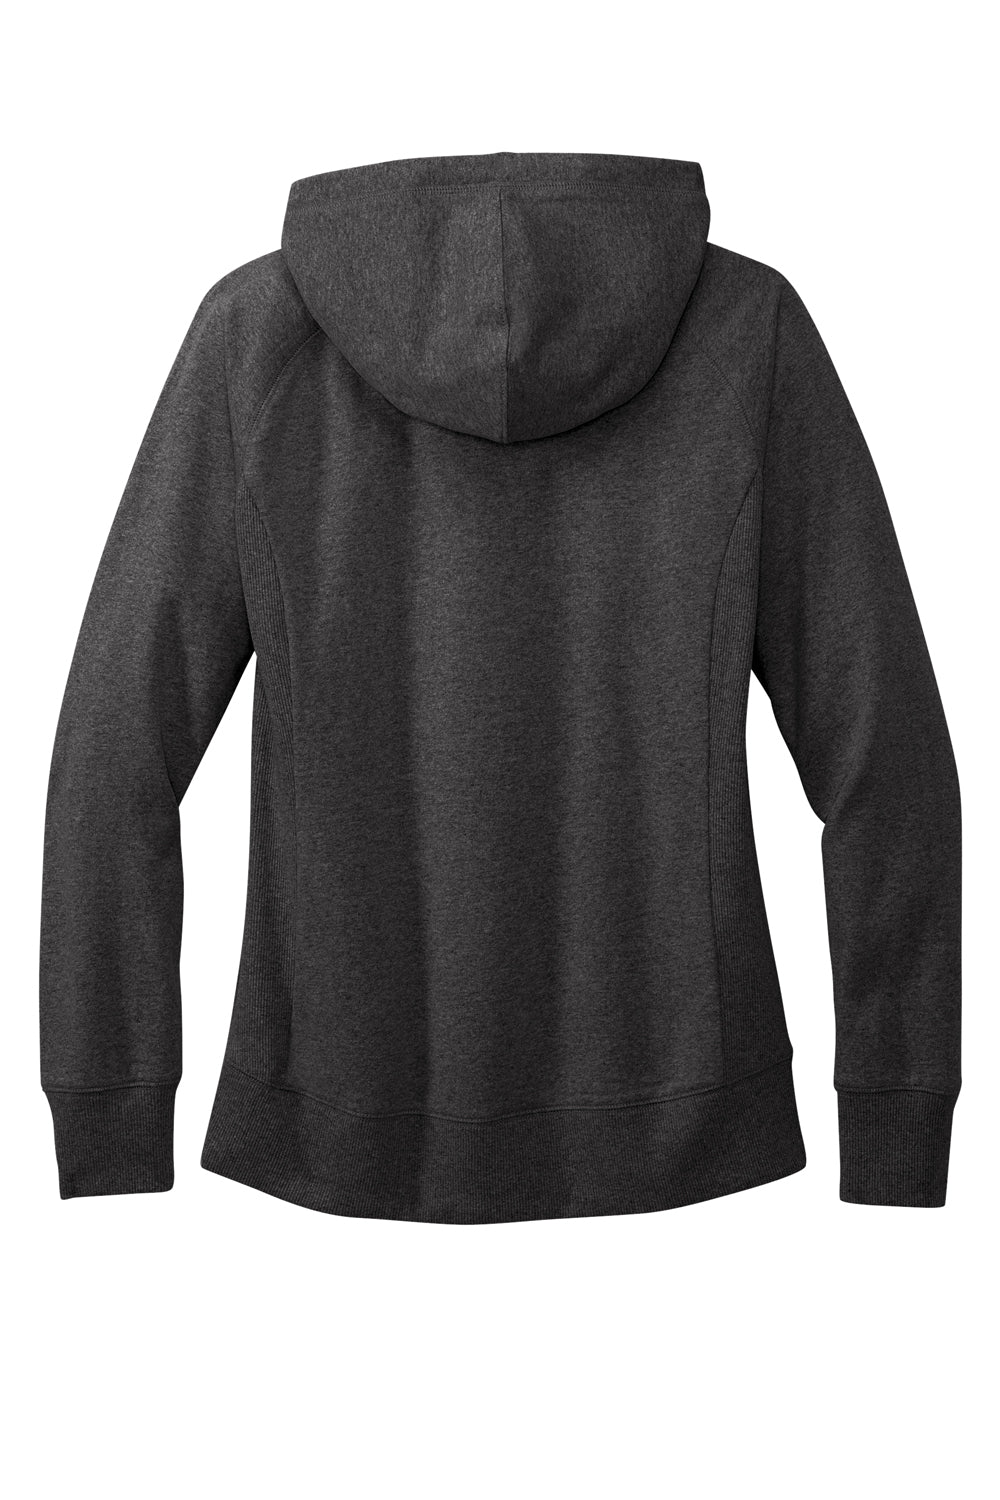 District DT8101 Womens Re-Fleece Hooded Sweatshirt Hoodie Heather Charcoal Grey Flat Back